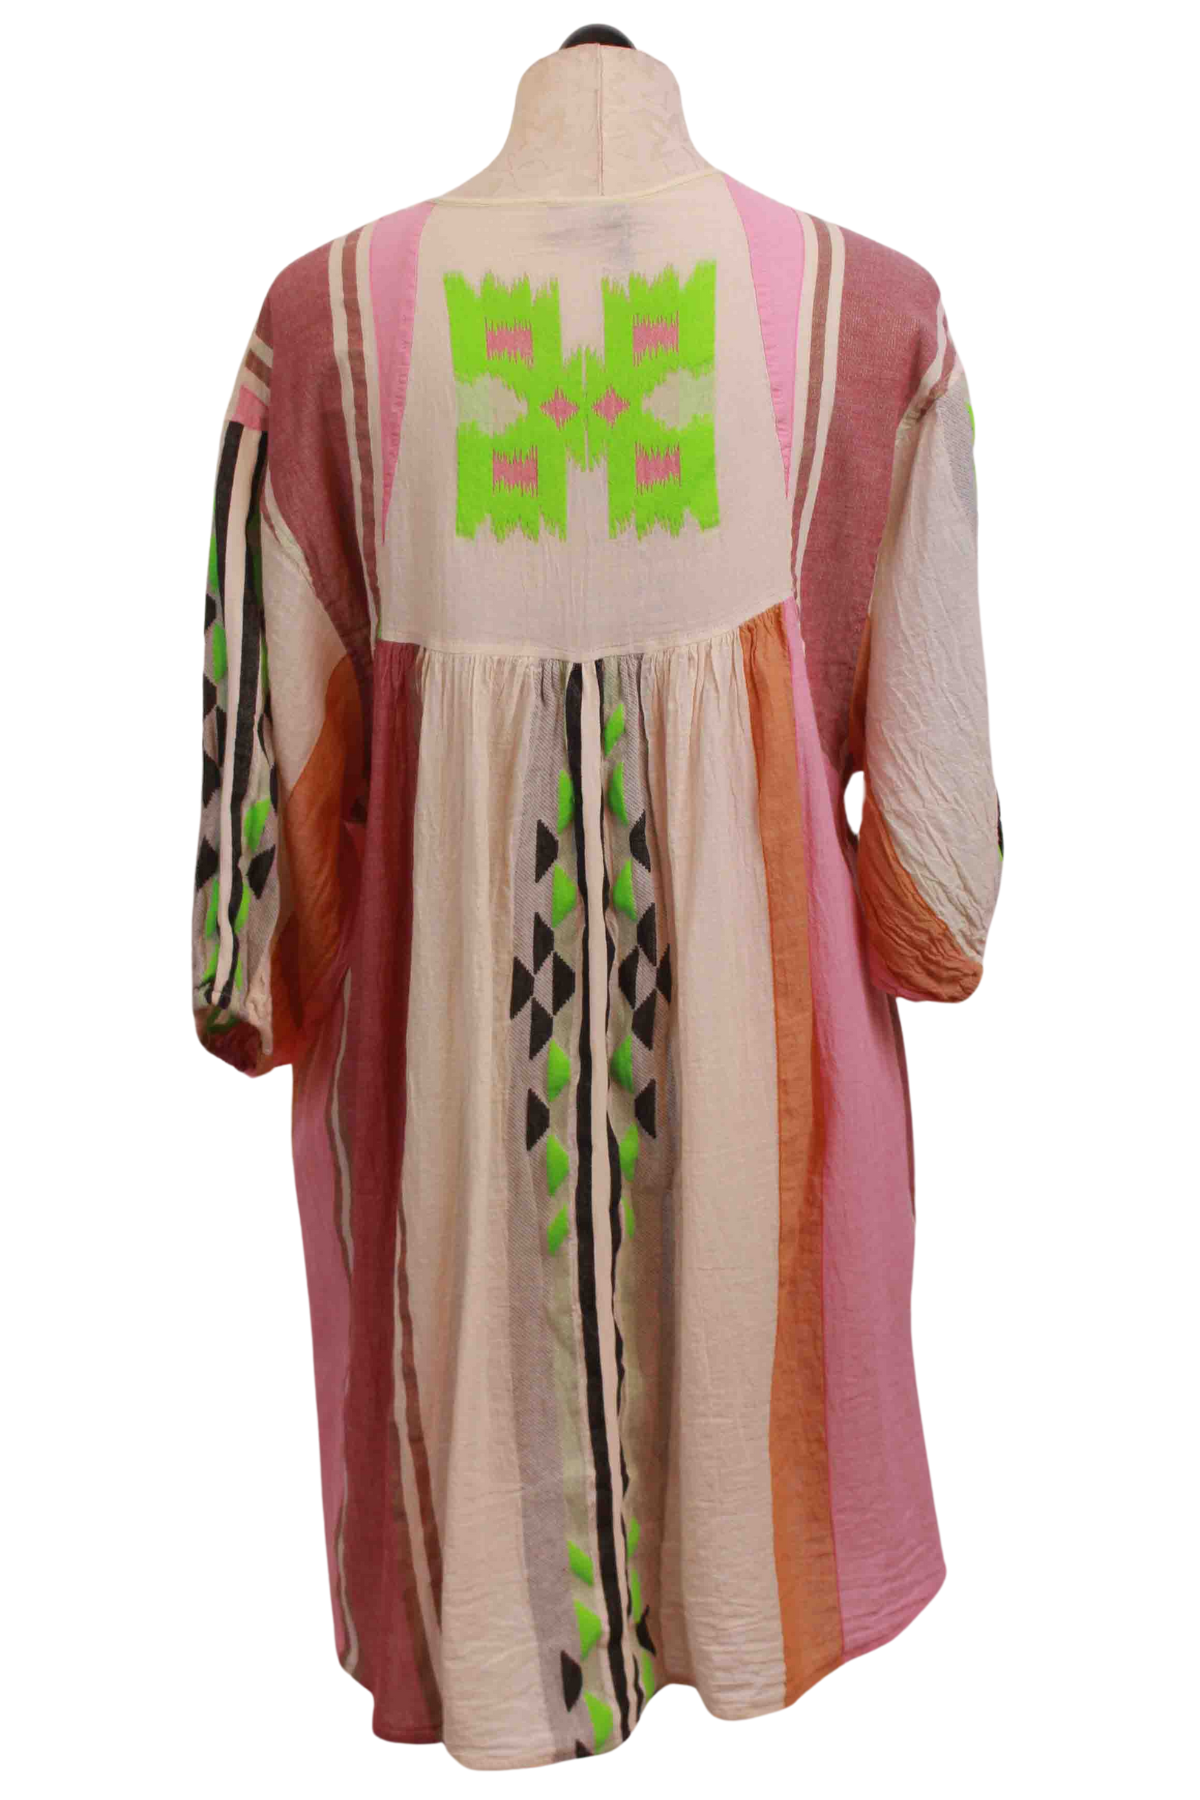 back view of Pink/Green Lili Short V Neck Dress by Devotion Twins